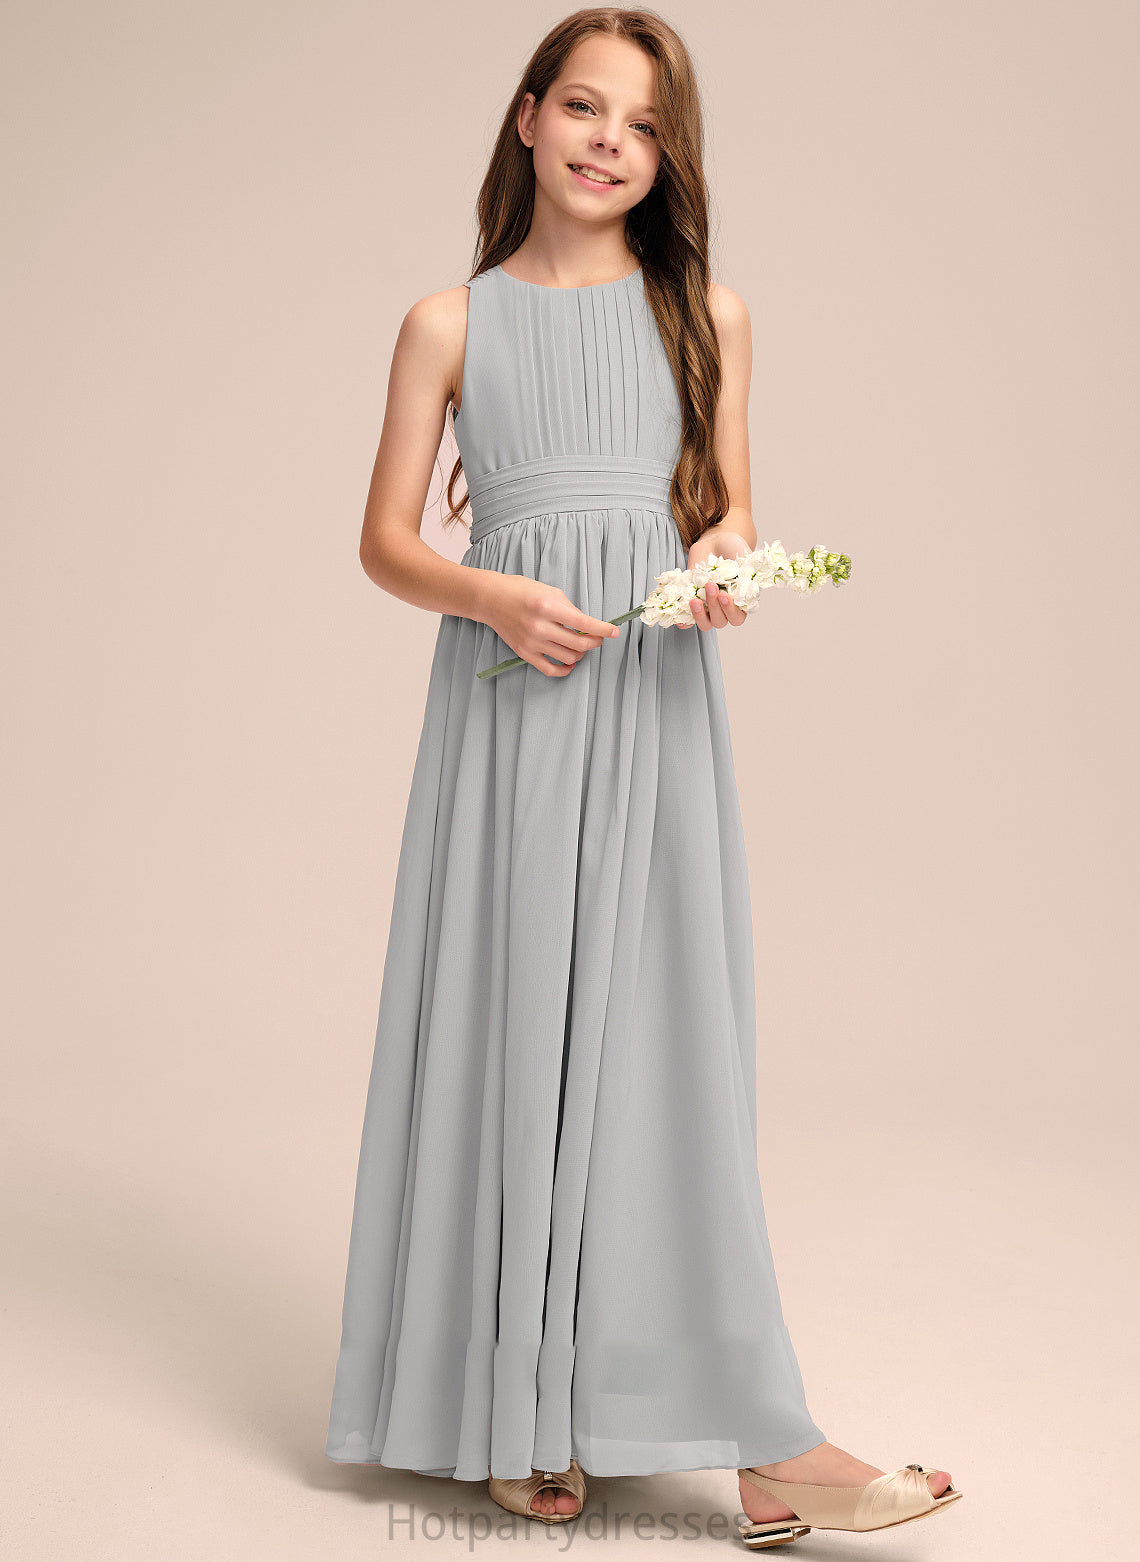 Ruffle Neck Scoop Floor-Length Junior Bridesmaid Dresses Bow(s) Alena With Chiffon A-Line